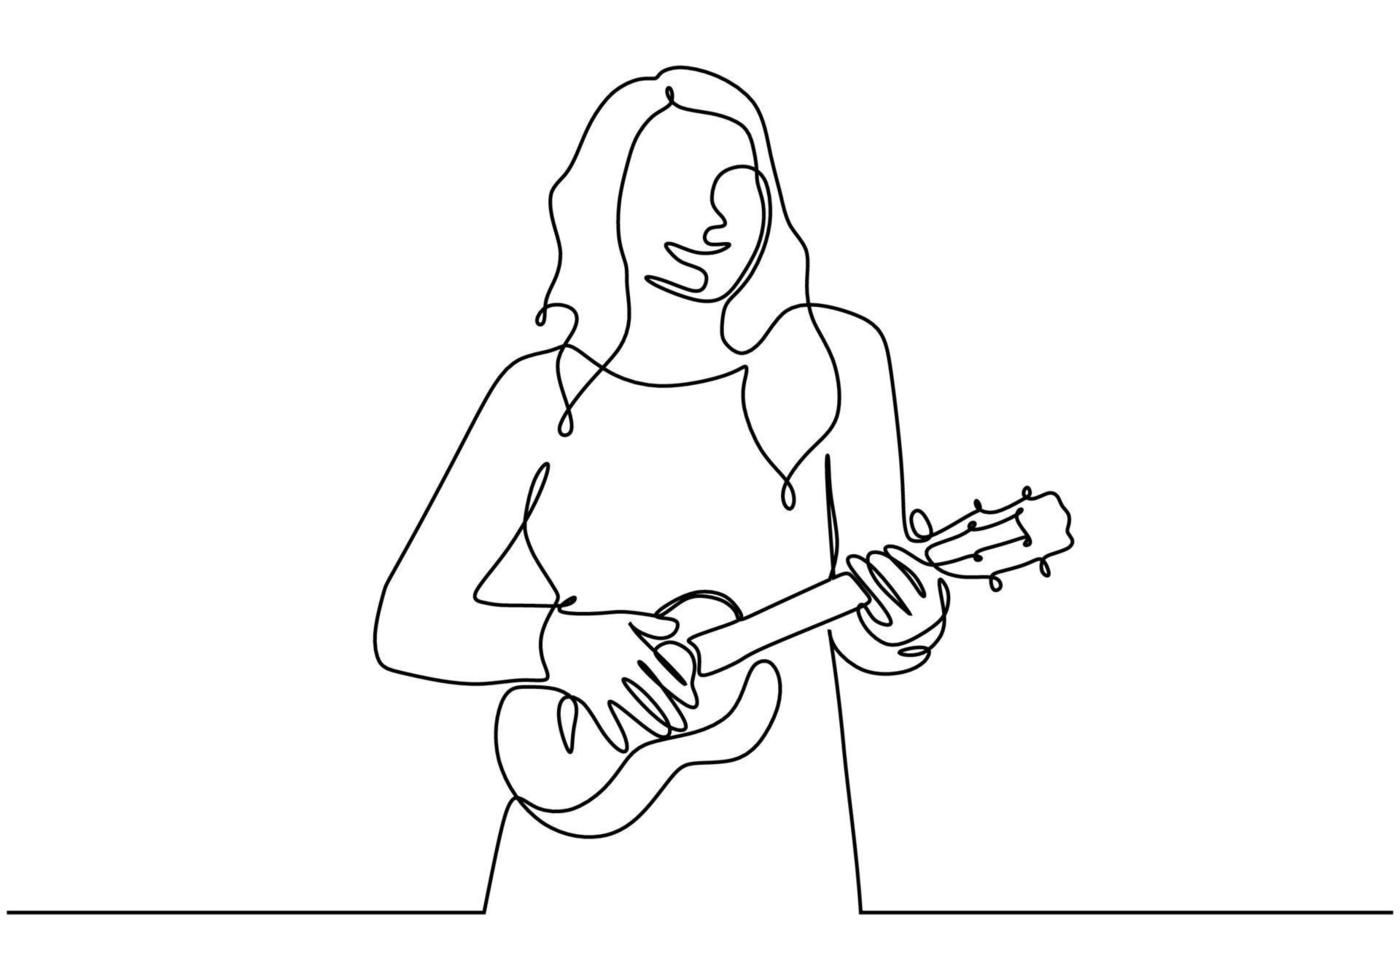 jong schattig meisje spelen ukulele string muziekinstrument lineart. vector